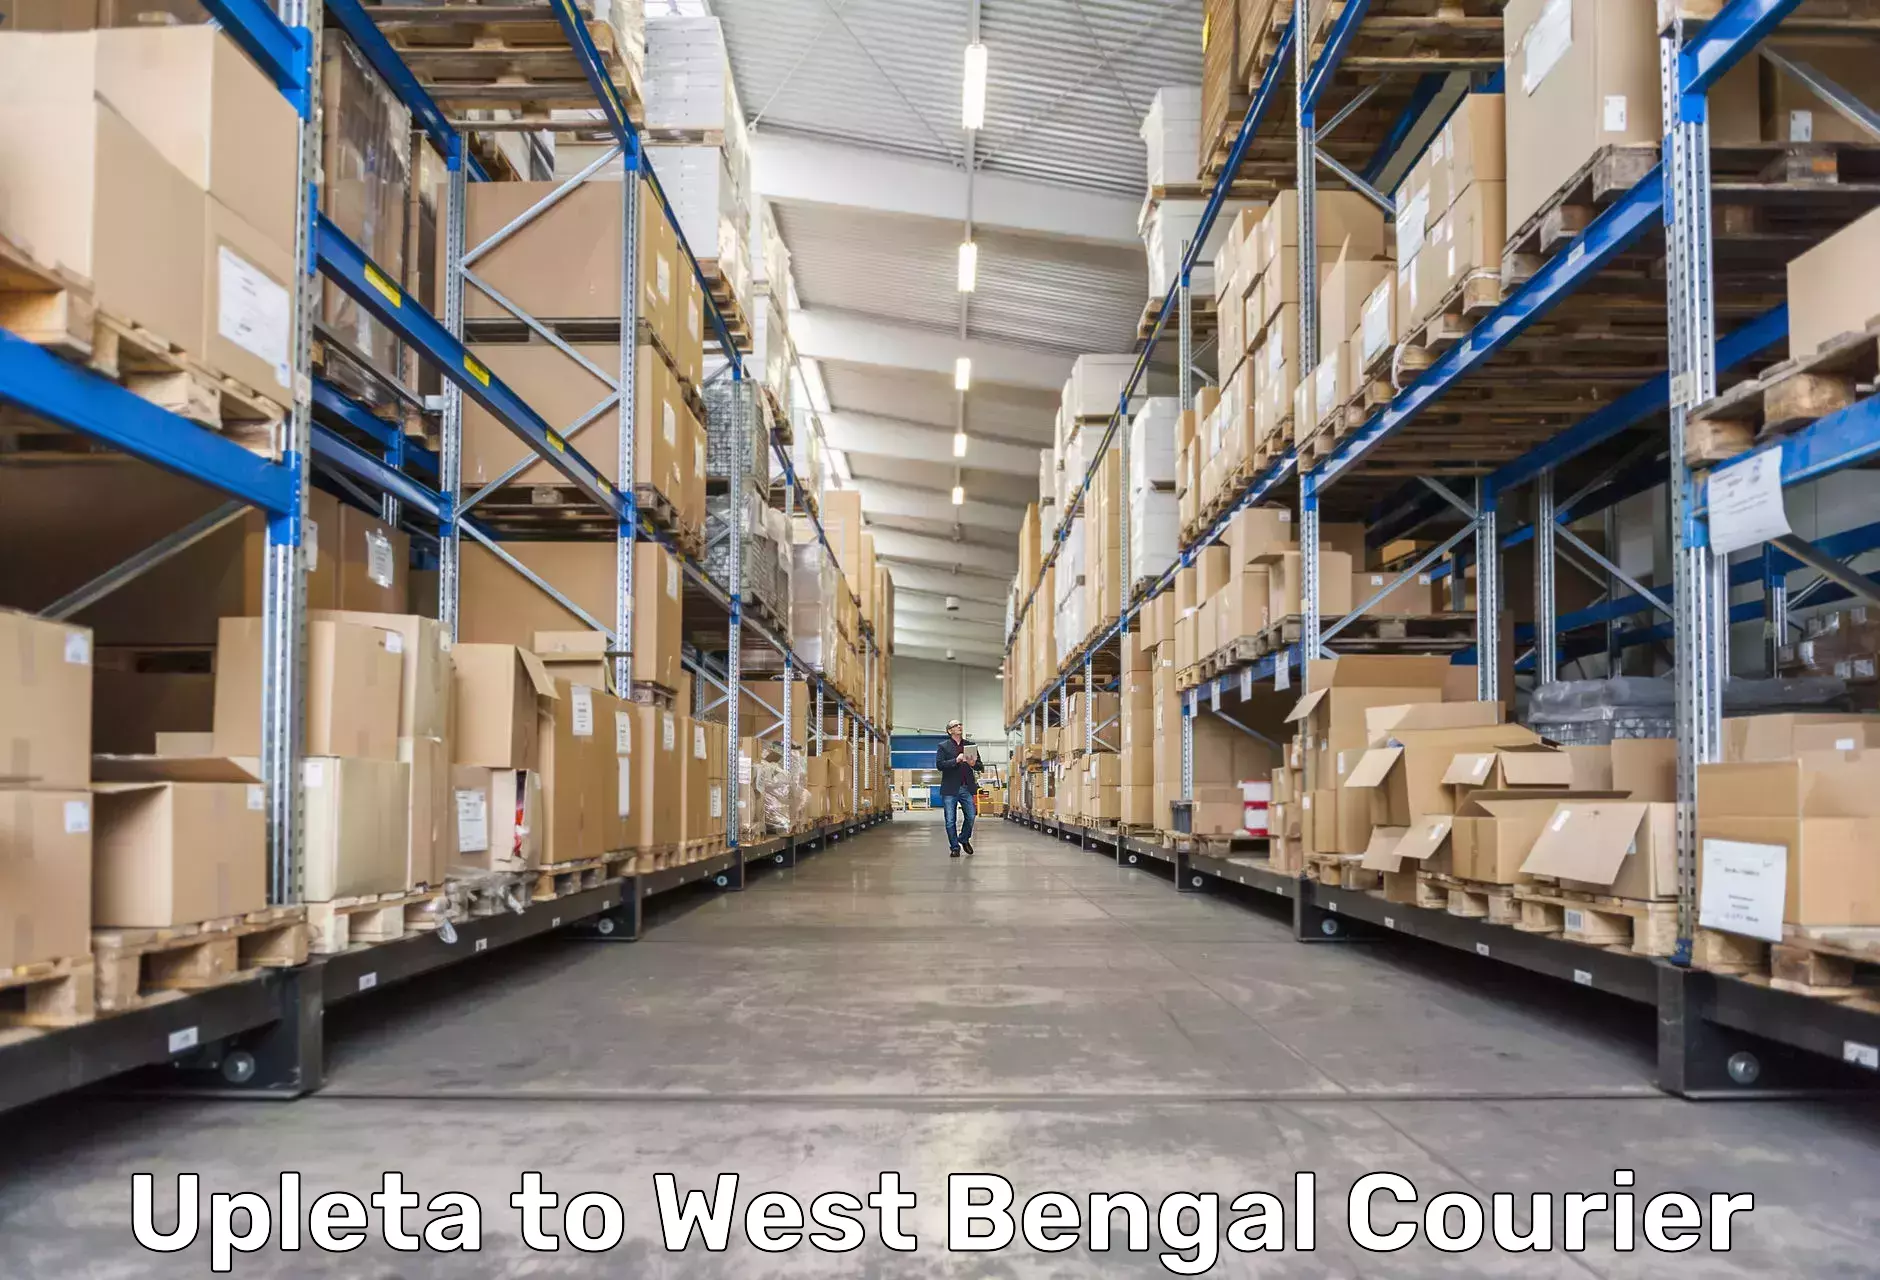 Courier app Upleta to West Bengal